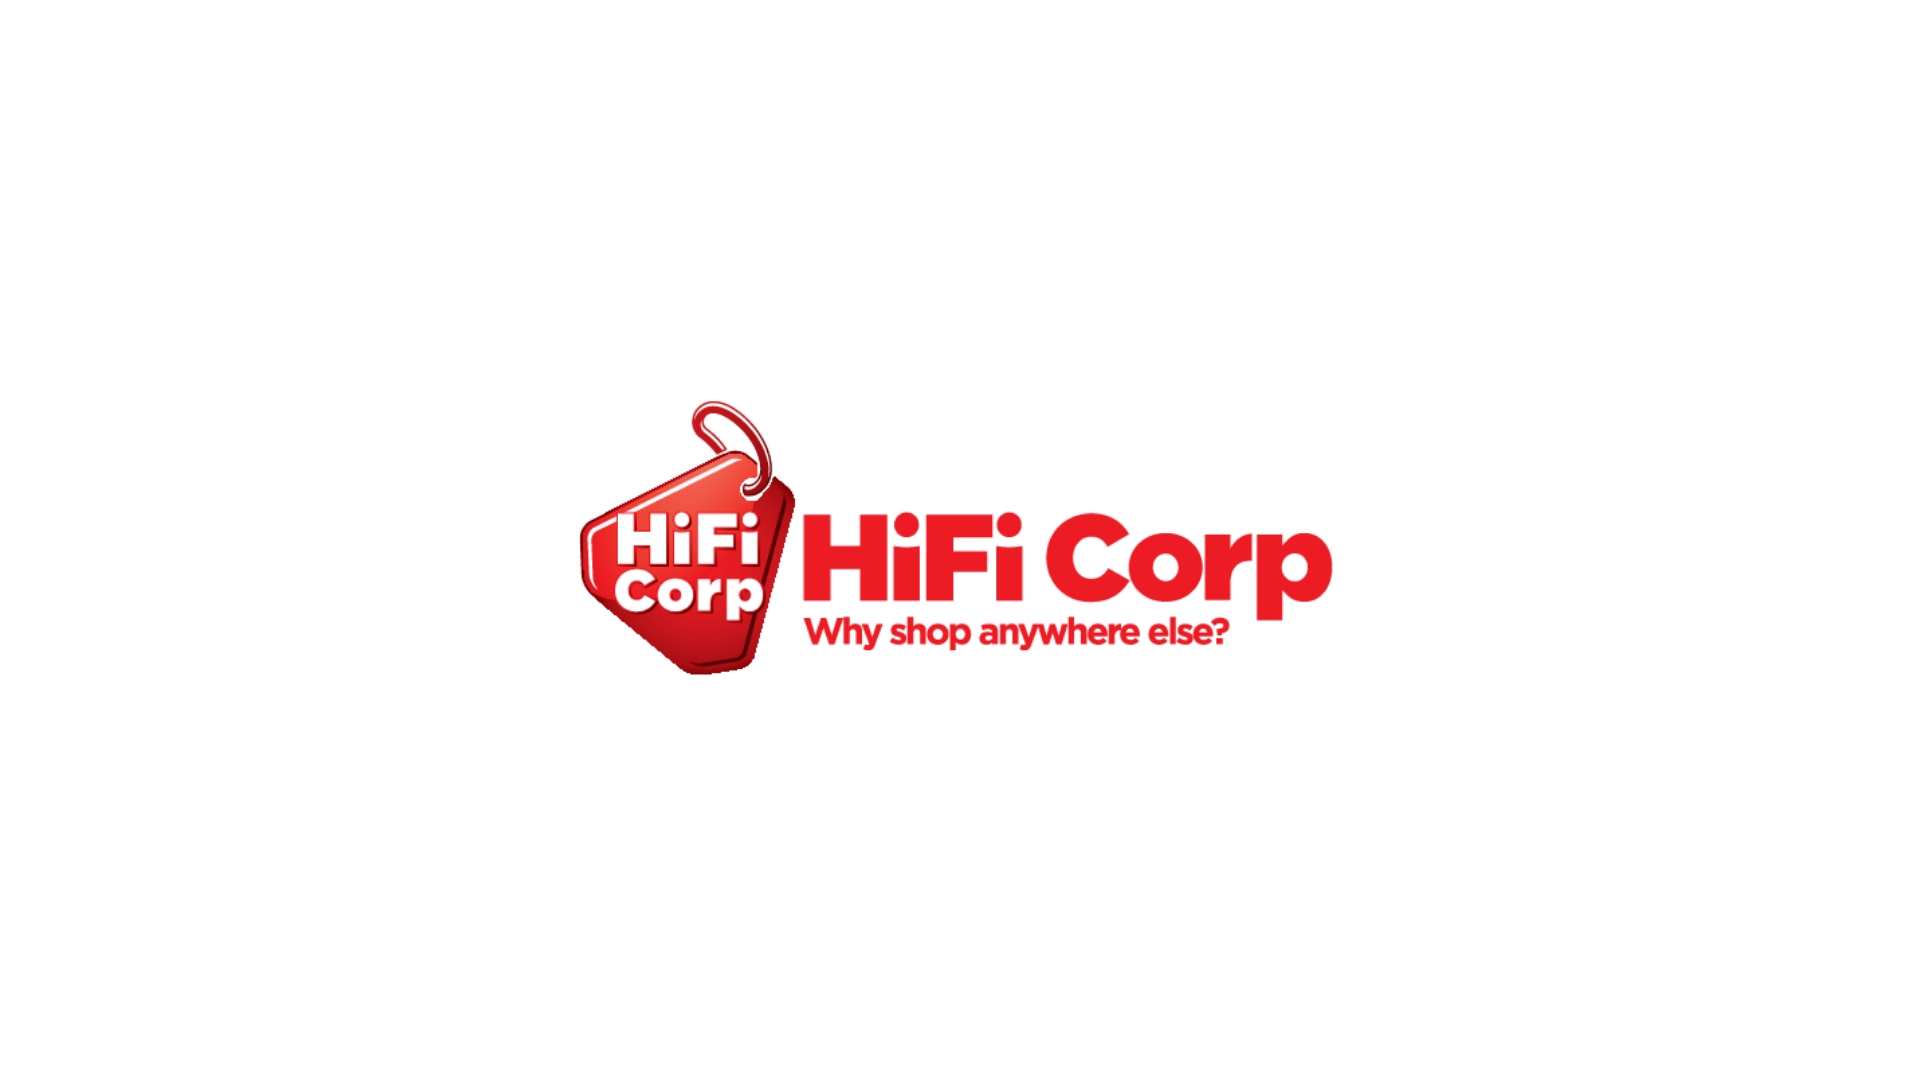 HiFiCorp